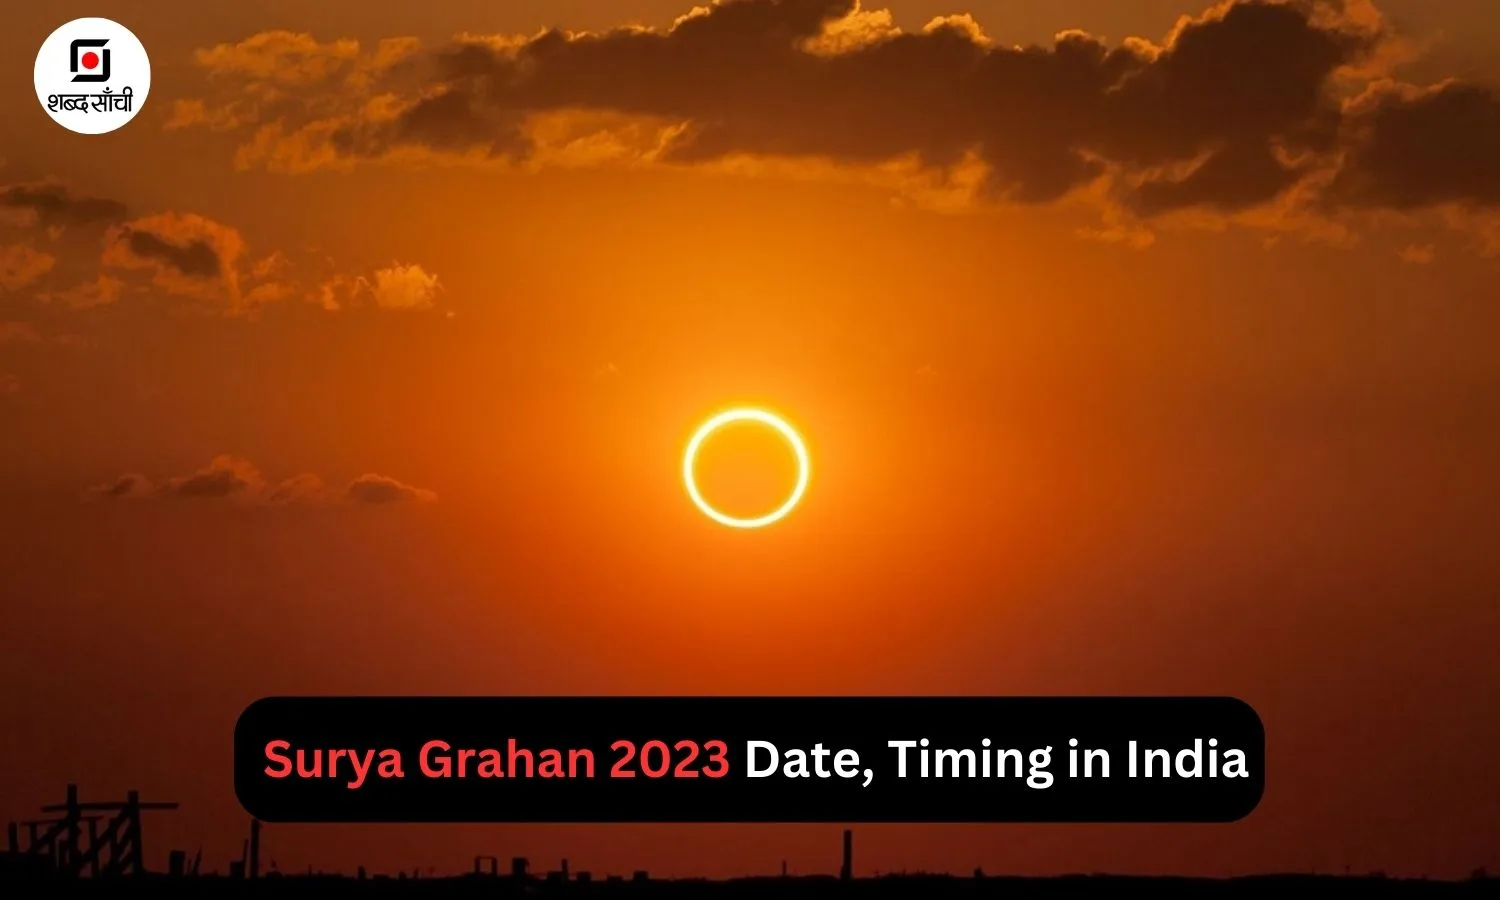 Surya Grahan 2023 Date, Timing in India